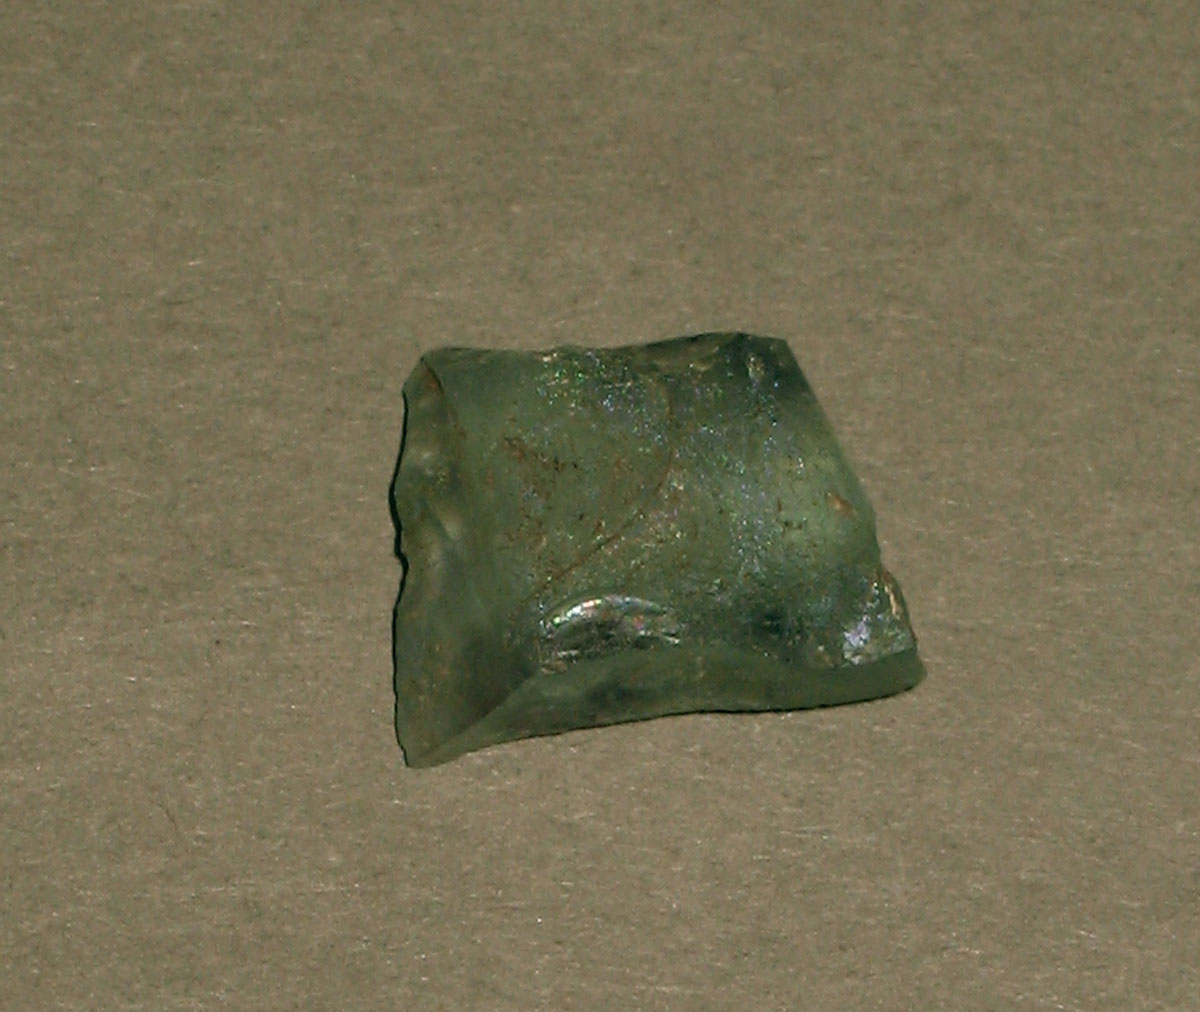 1958.0002.006.109 Glass fragment